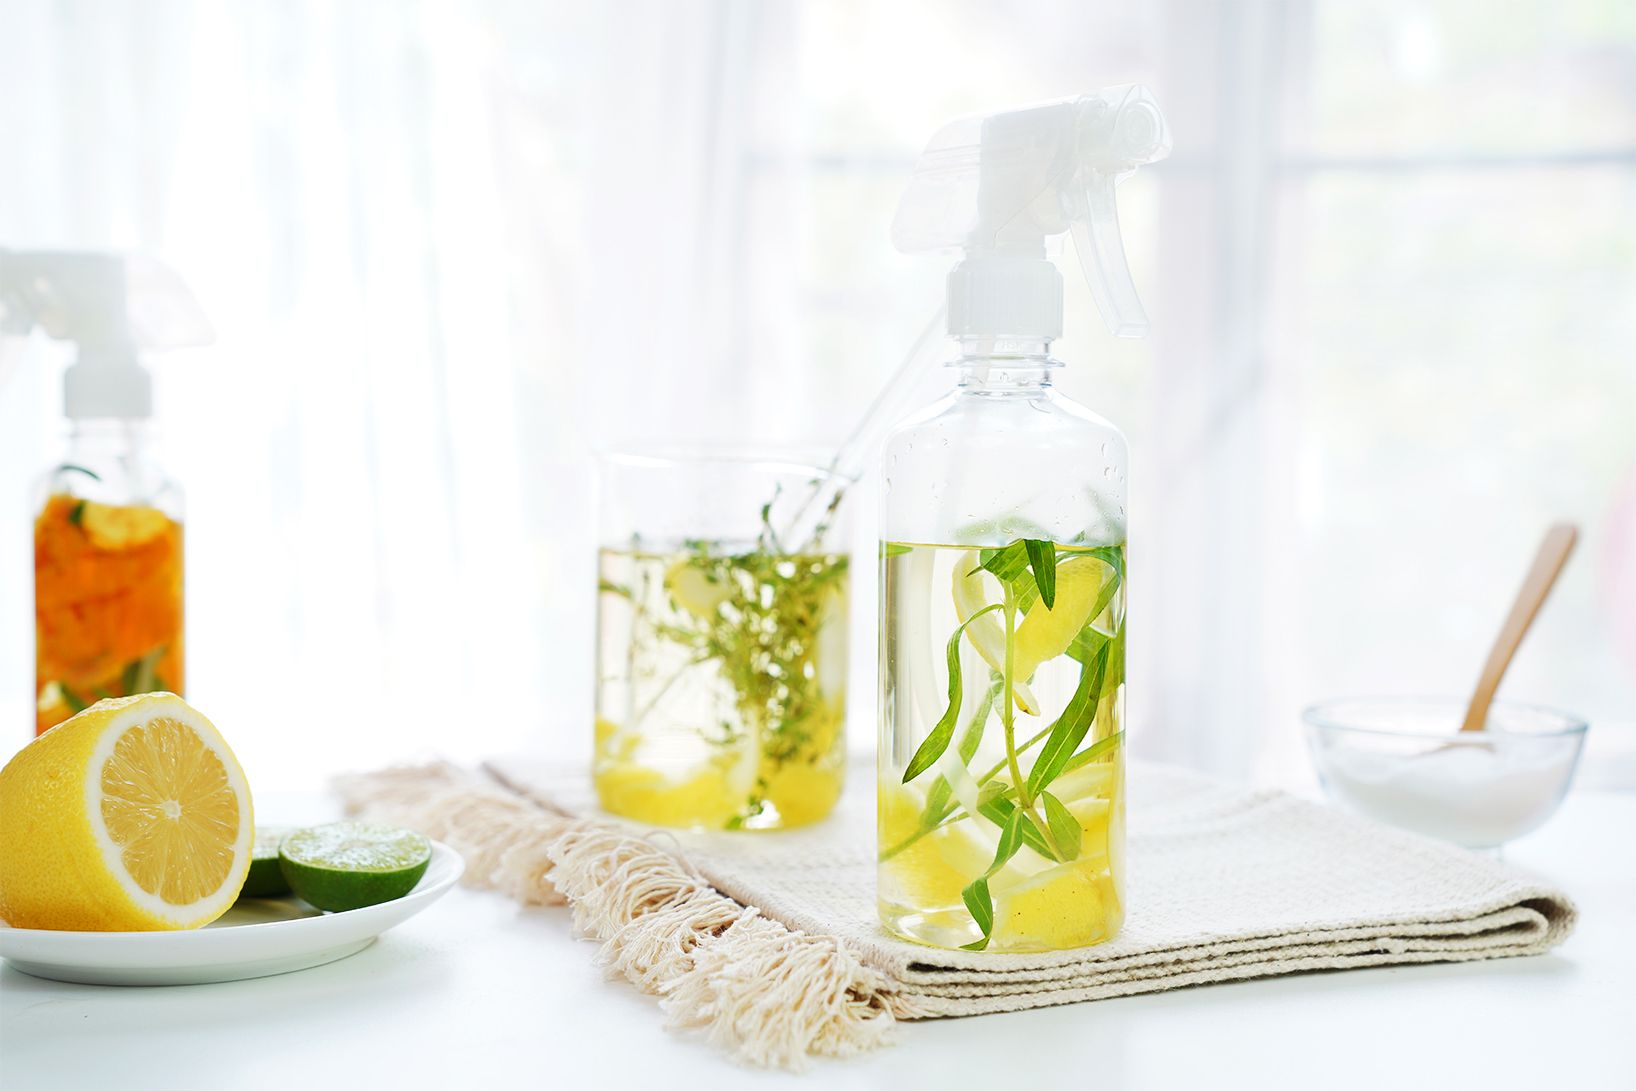 homemade citrus aromatic vinegar cleaner spray natural ingredients environmentally friendly